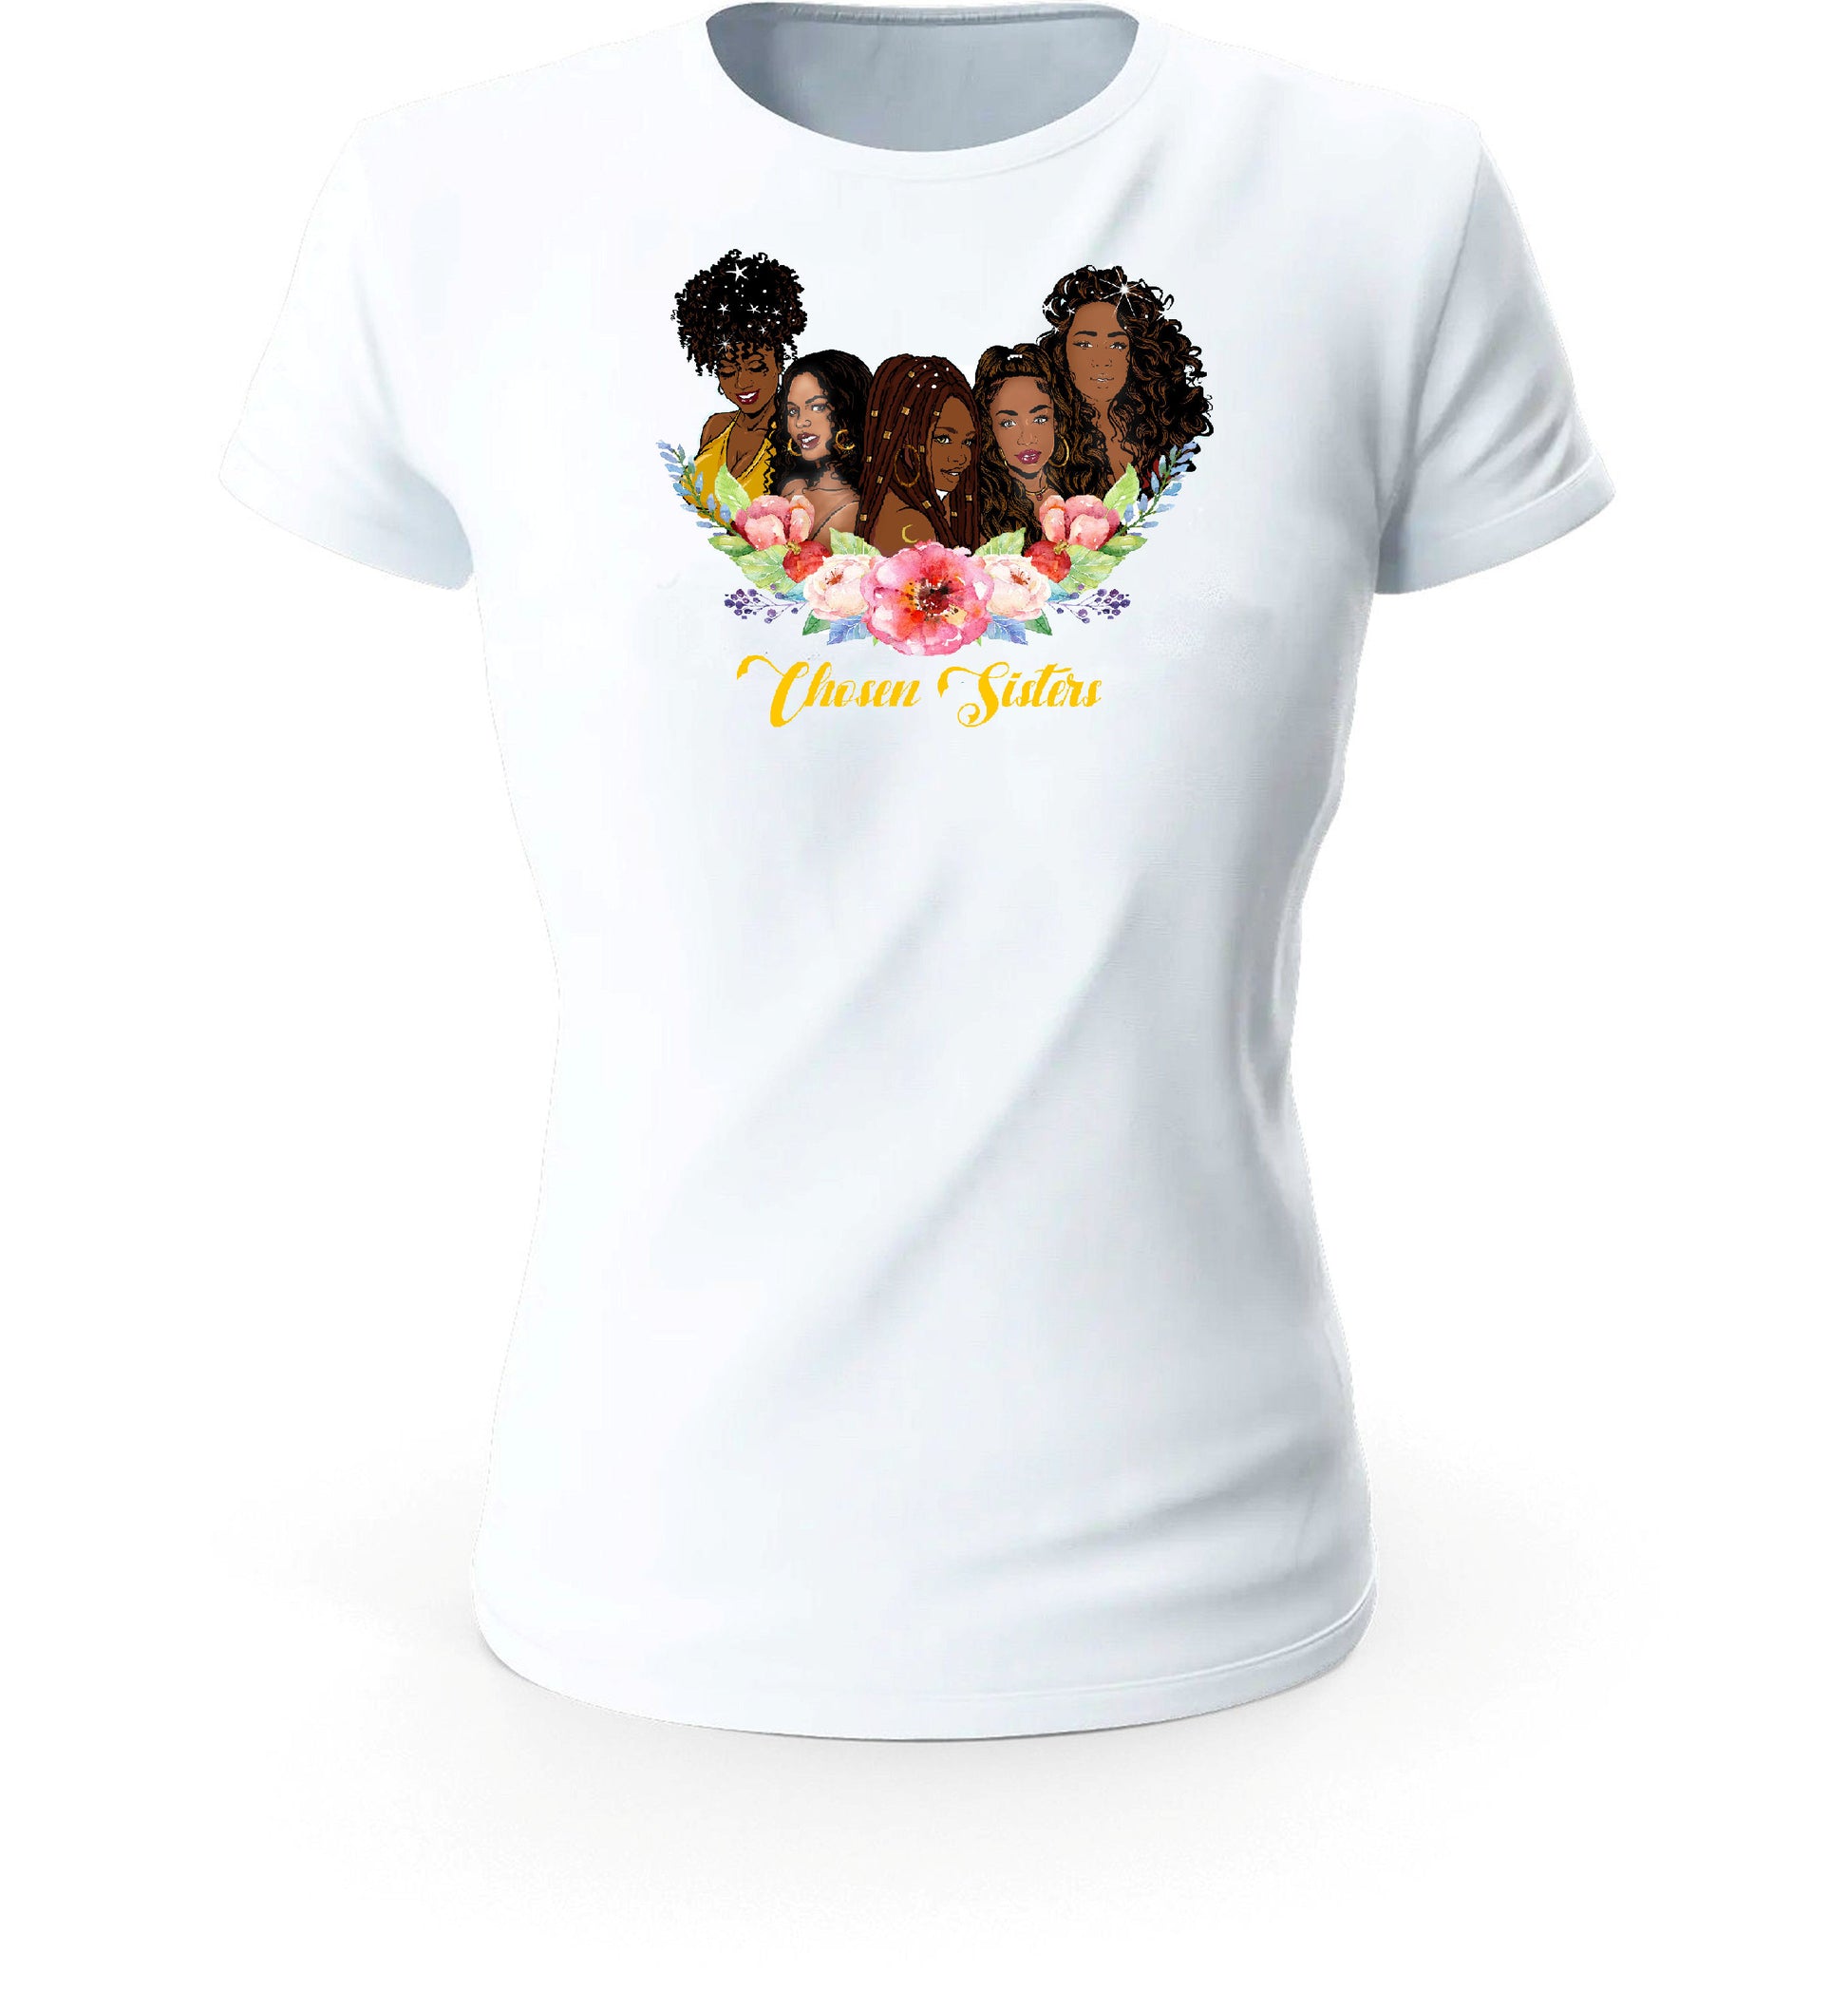 Chosen Sisters Group T-Shirt